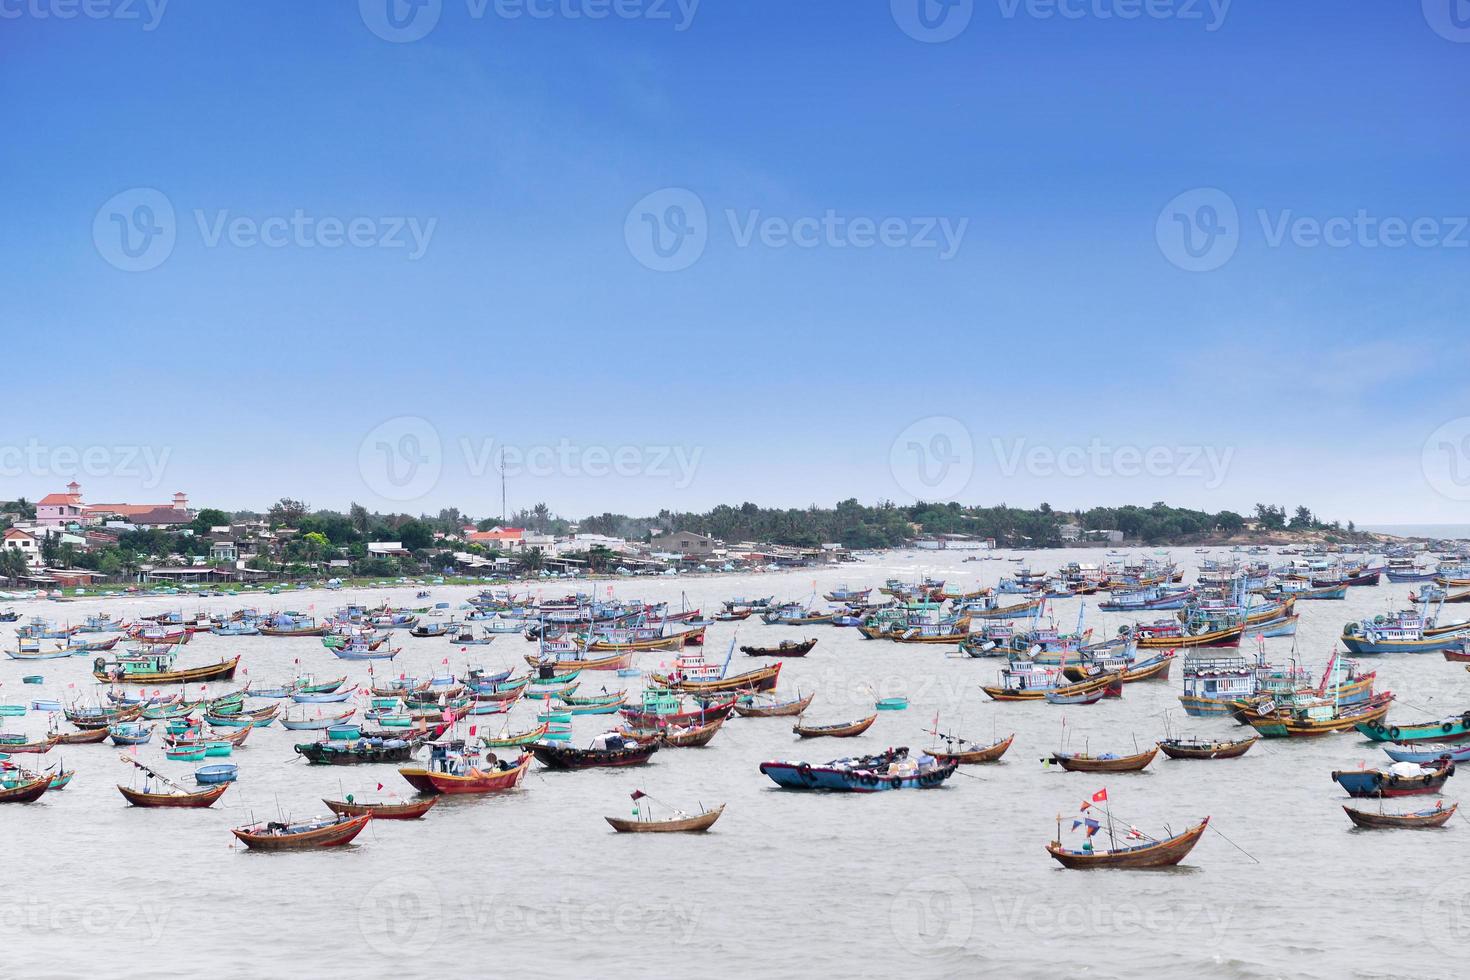 Vietnamese fishing village, Mui Ne, Vietnam, Southeast Asia. Landscape with sea and traditional colorful fishing boats at Muine. Popular landmark and tourist destination of Vietnam. photo